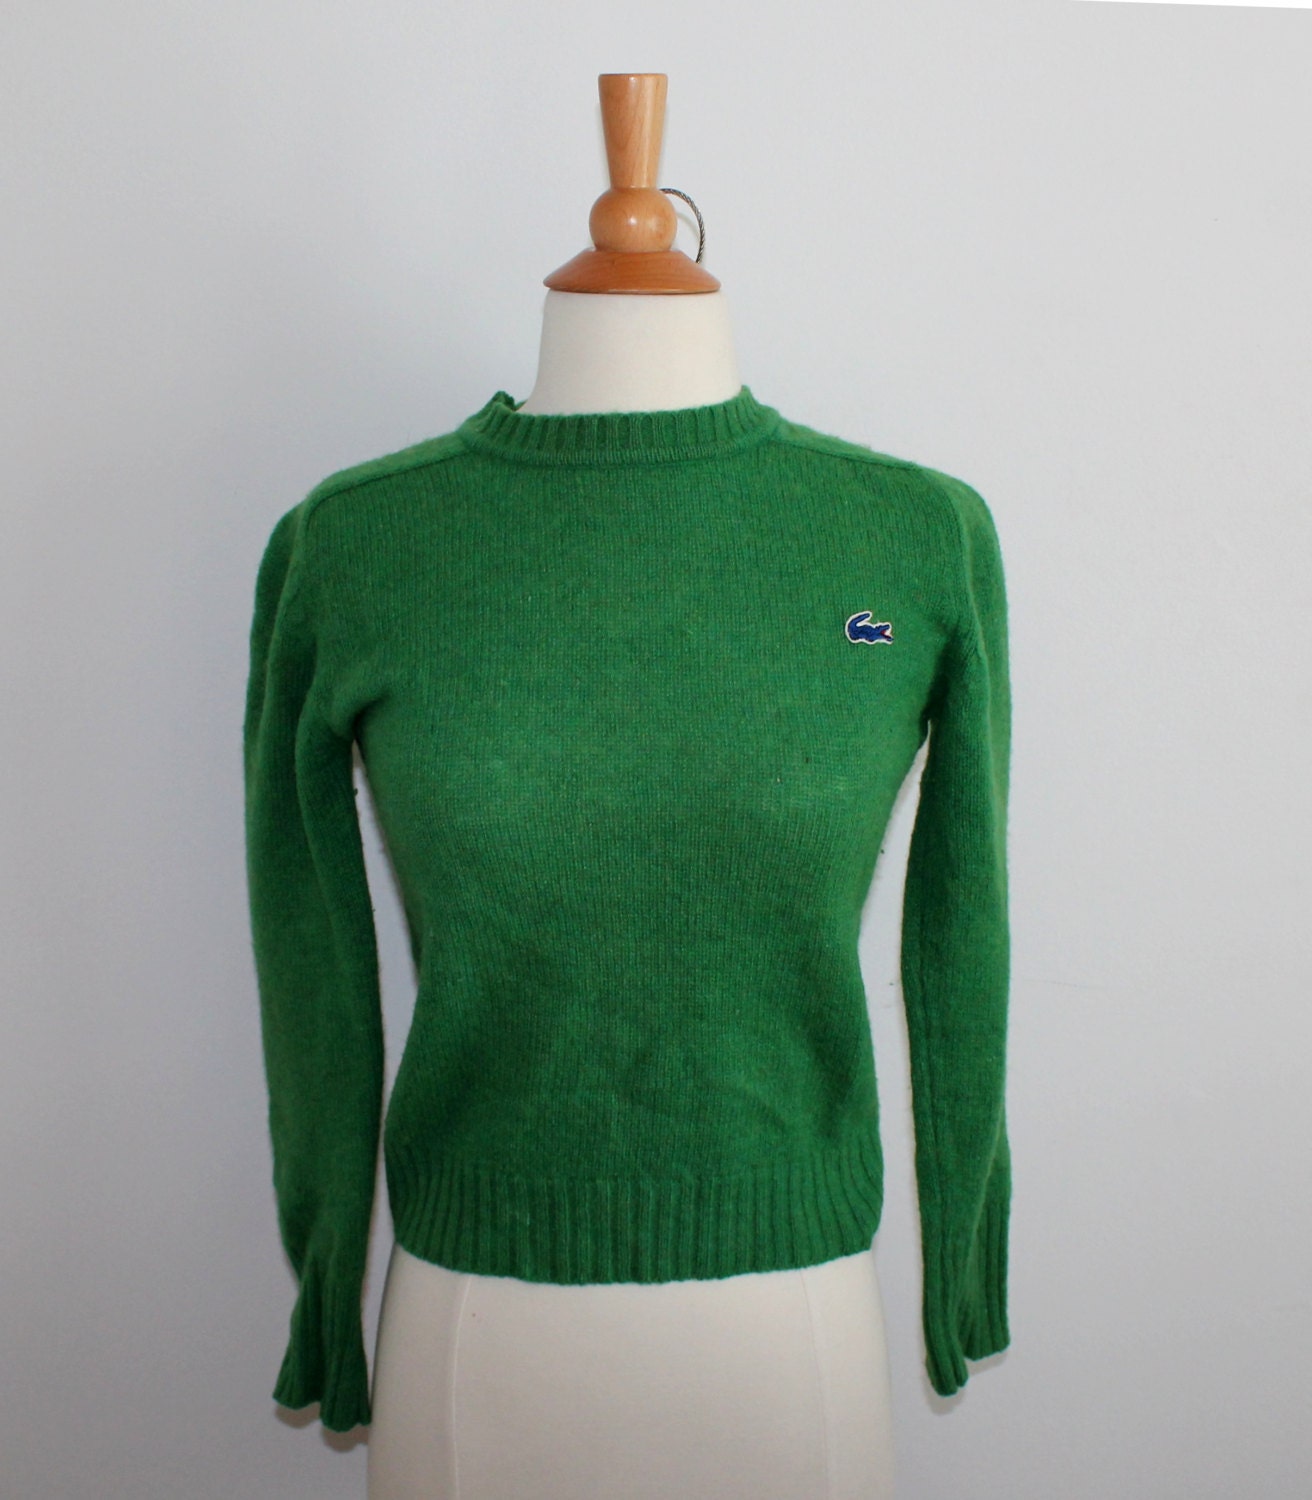 Green IZOD Lacoste Sweater by AutrefoisVintage on Etsy